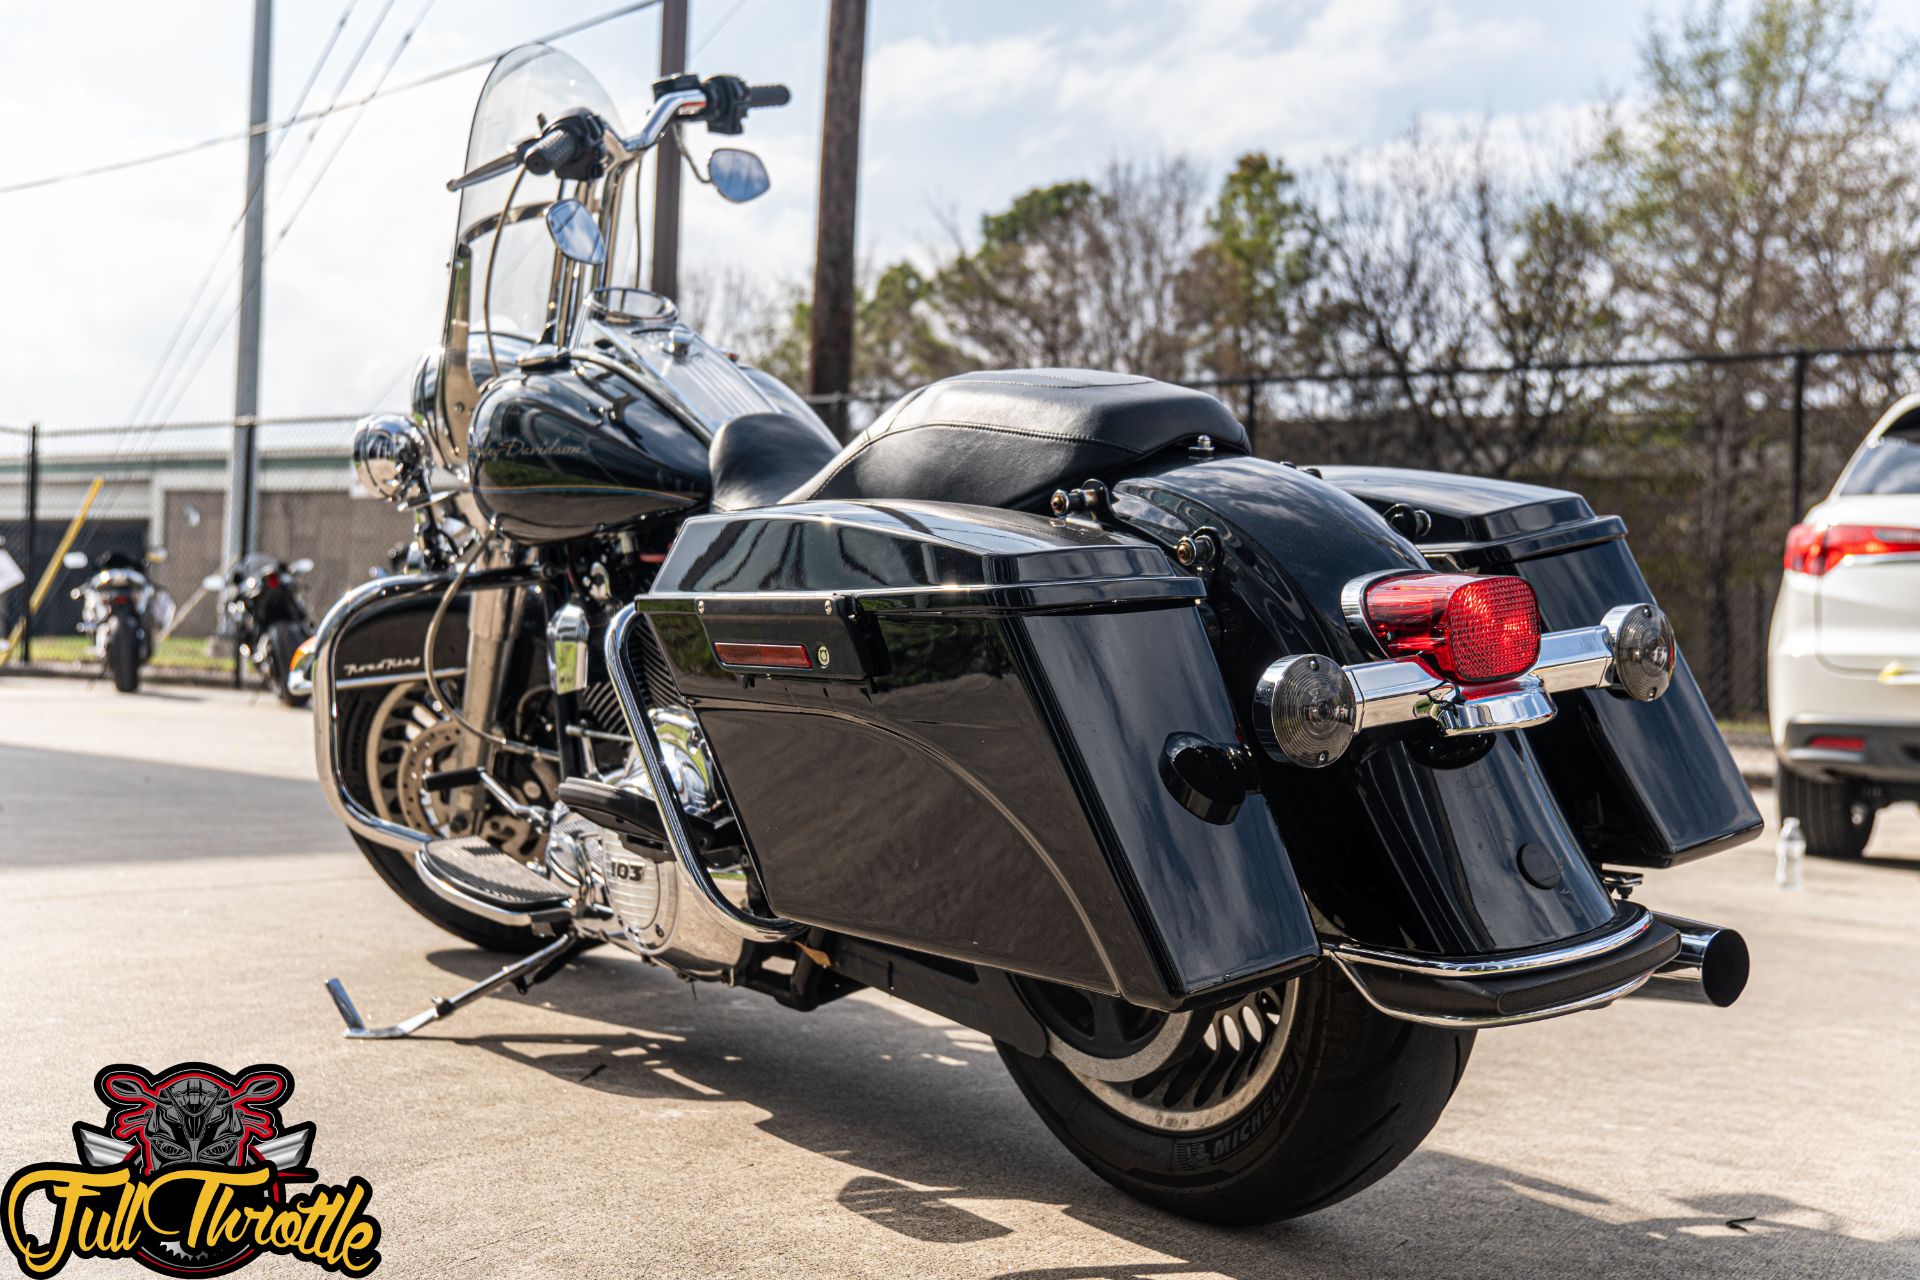 2012 Harley-Davidson Road King® in Houston, Texas - Photo 5